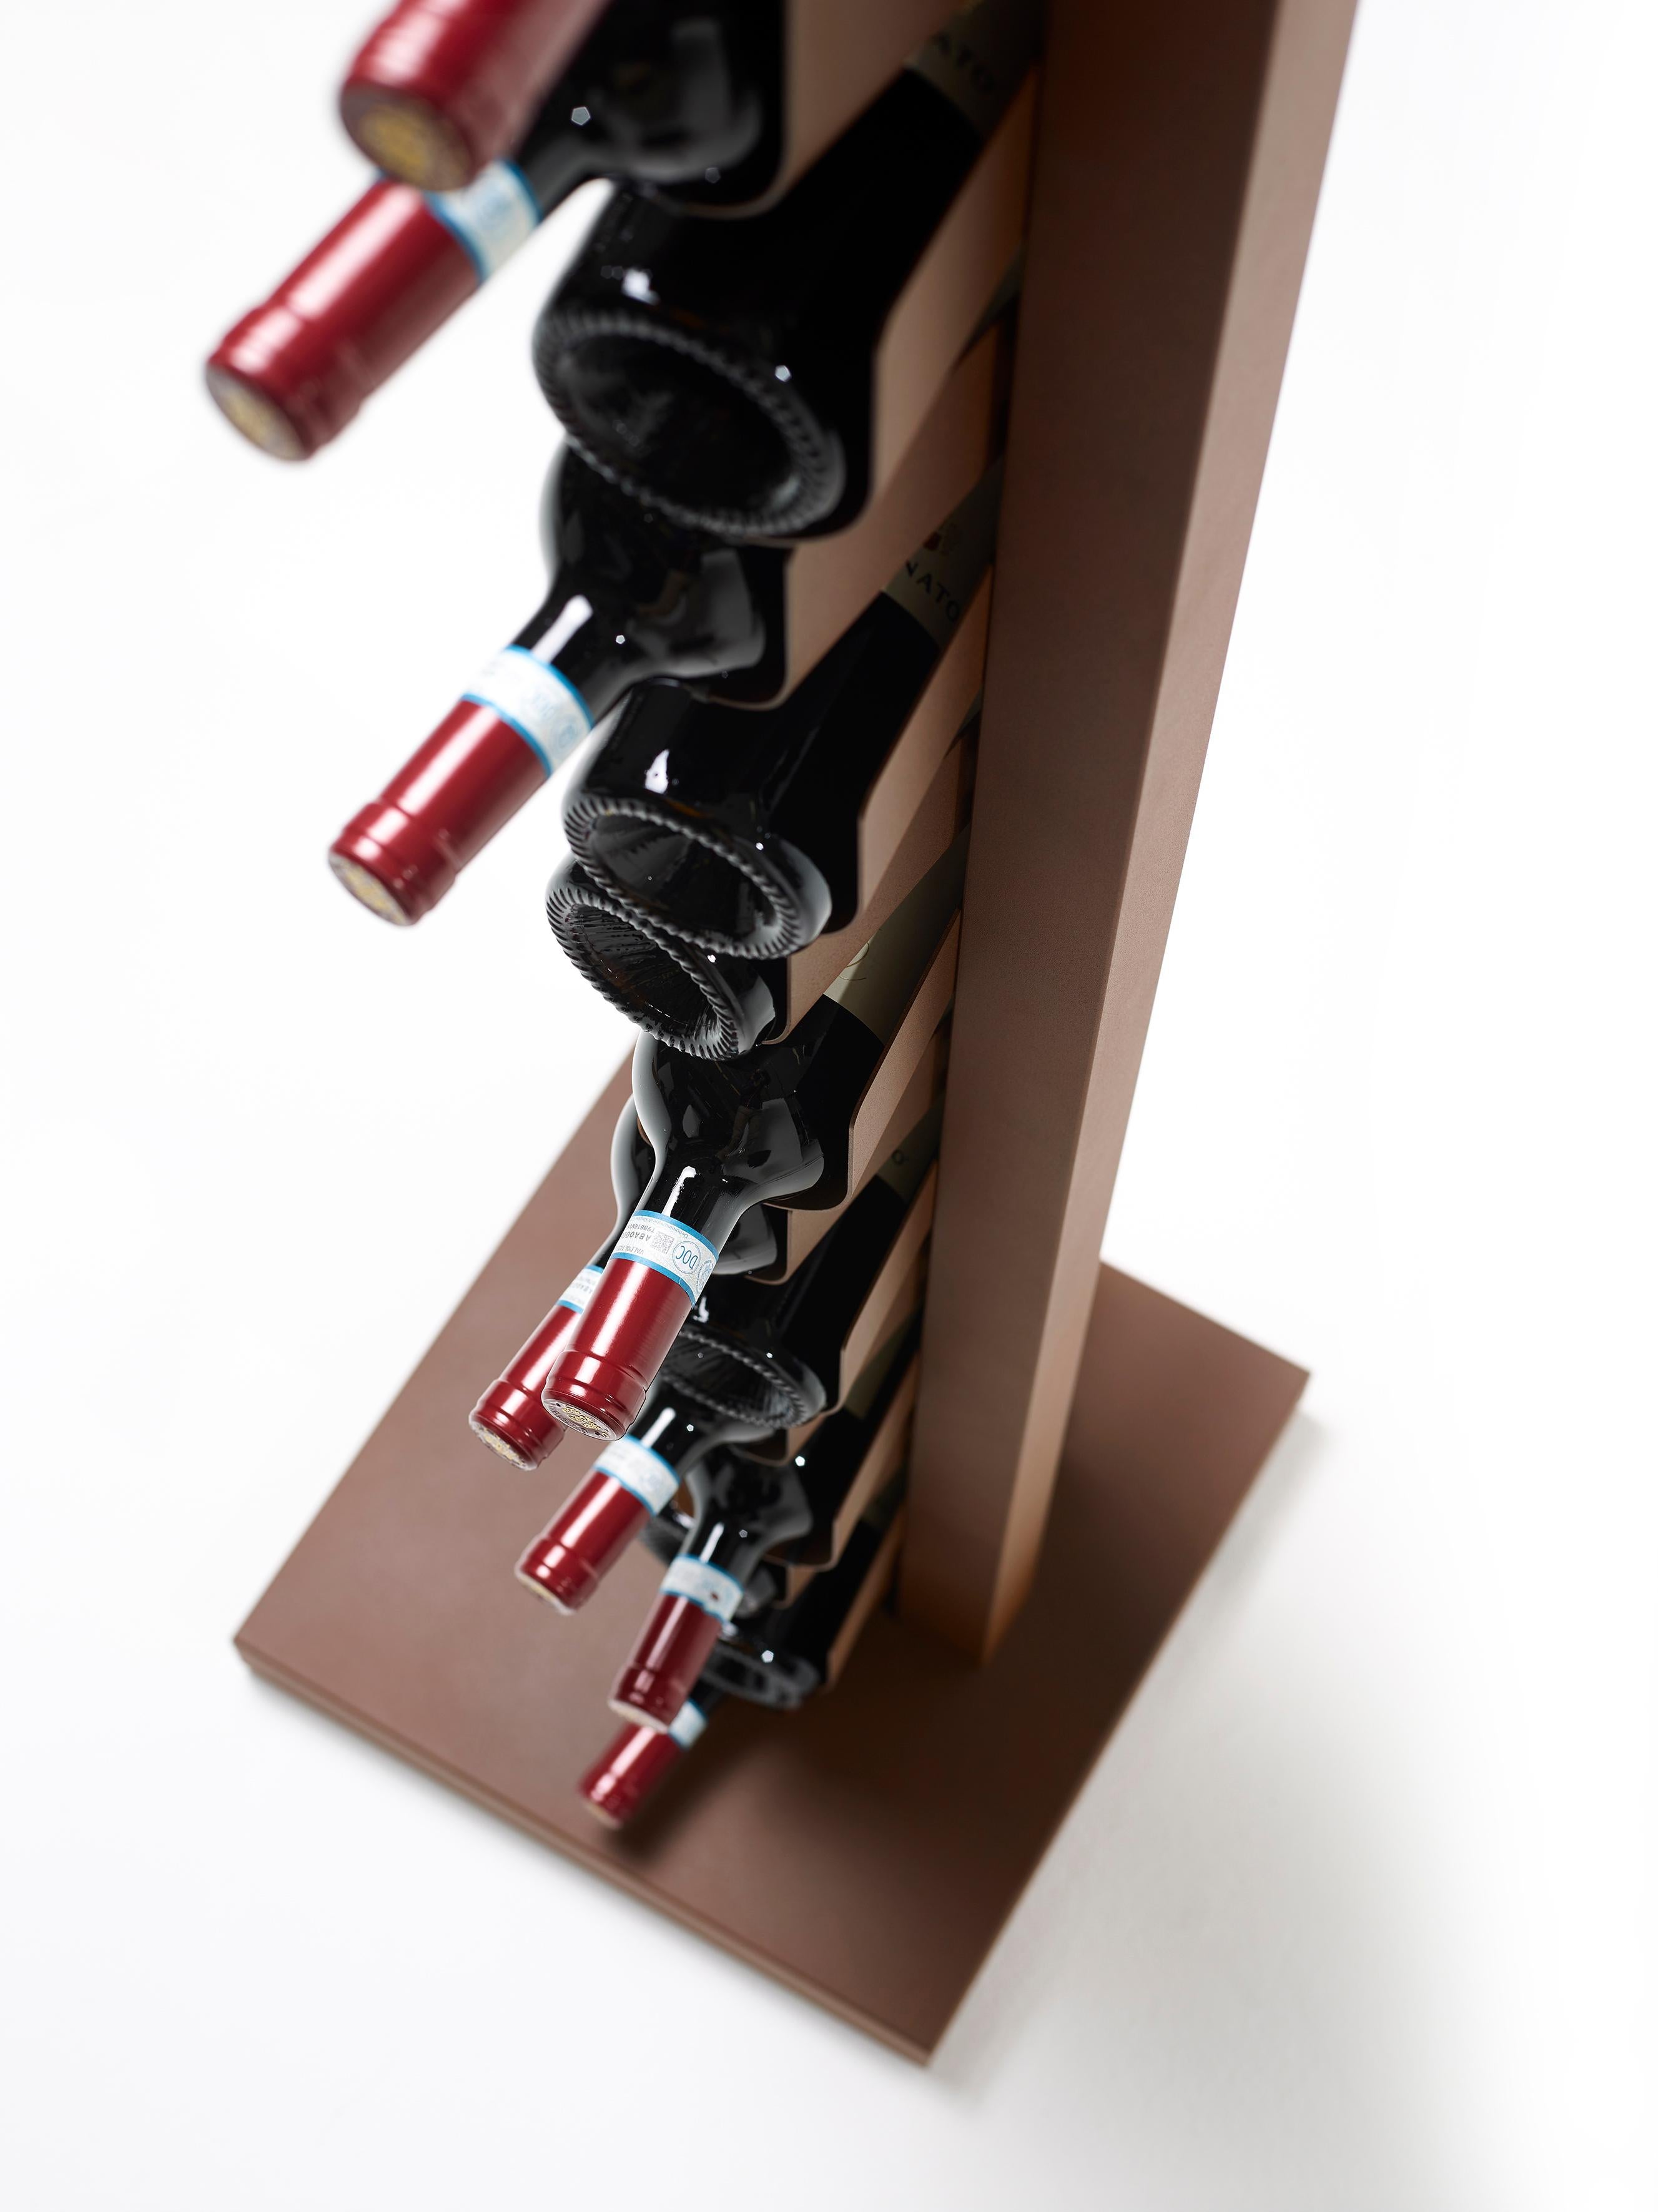 En vente : Brown (Corten) Porte-bouteilles vertical Ptolomeo Vino de Opinion Ciatti, grand modèle 3